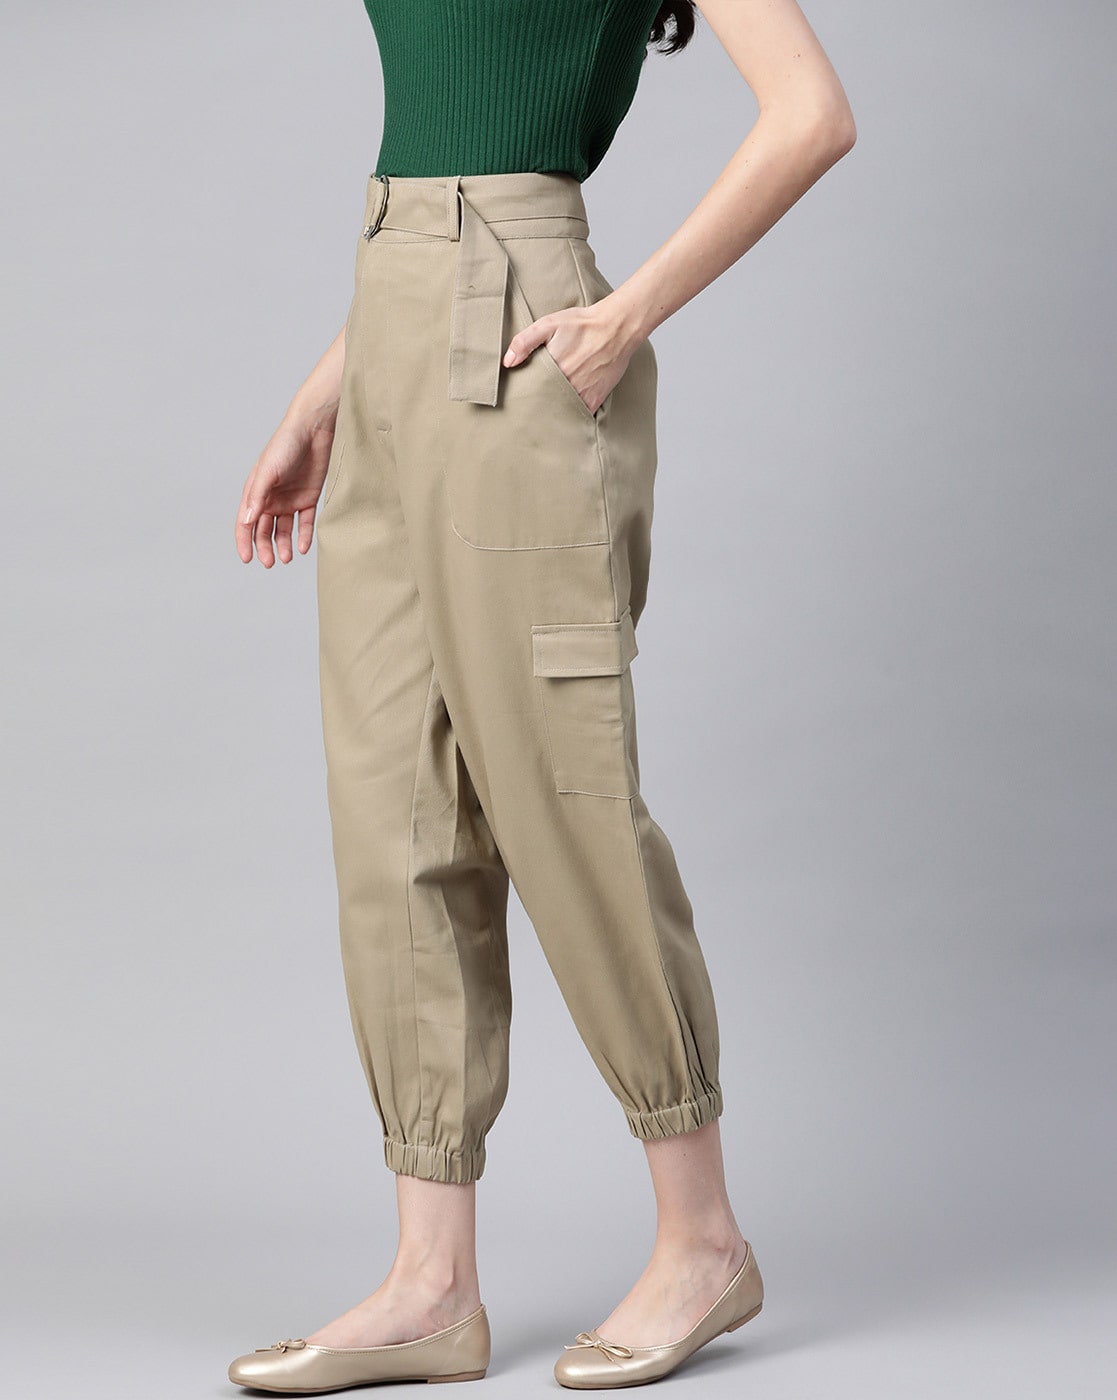 Dark Beige Cargo Pants - Bam Clothing